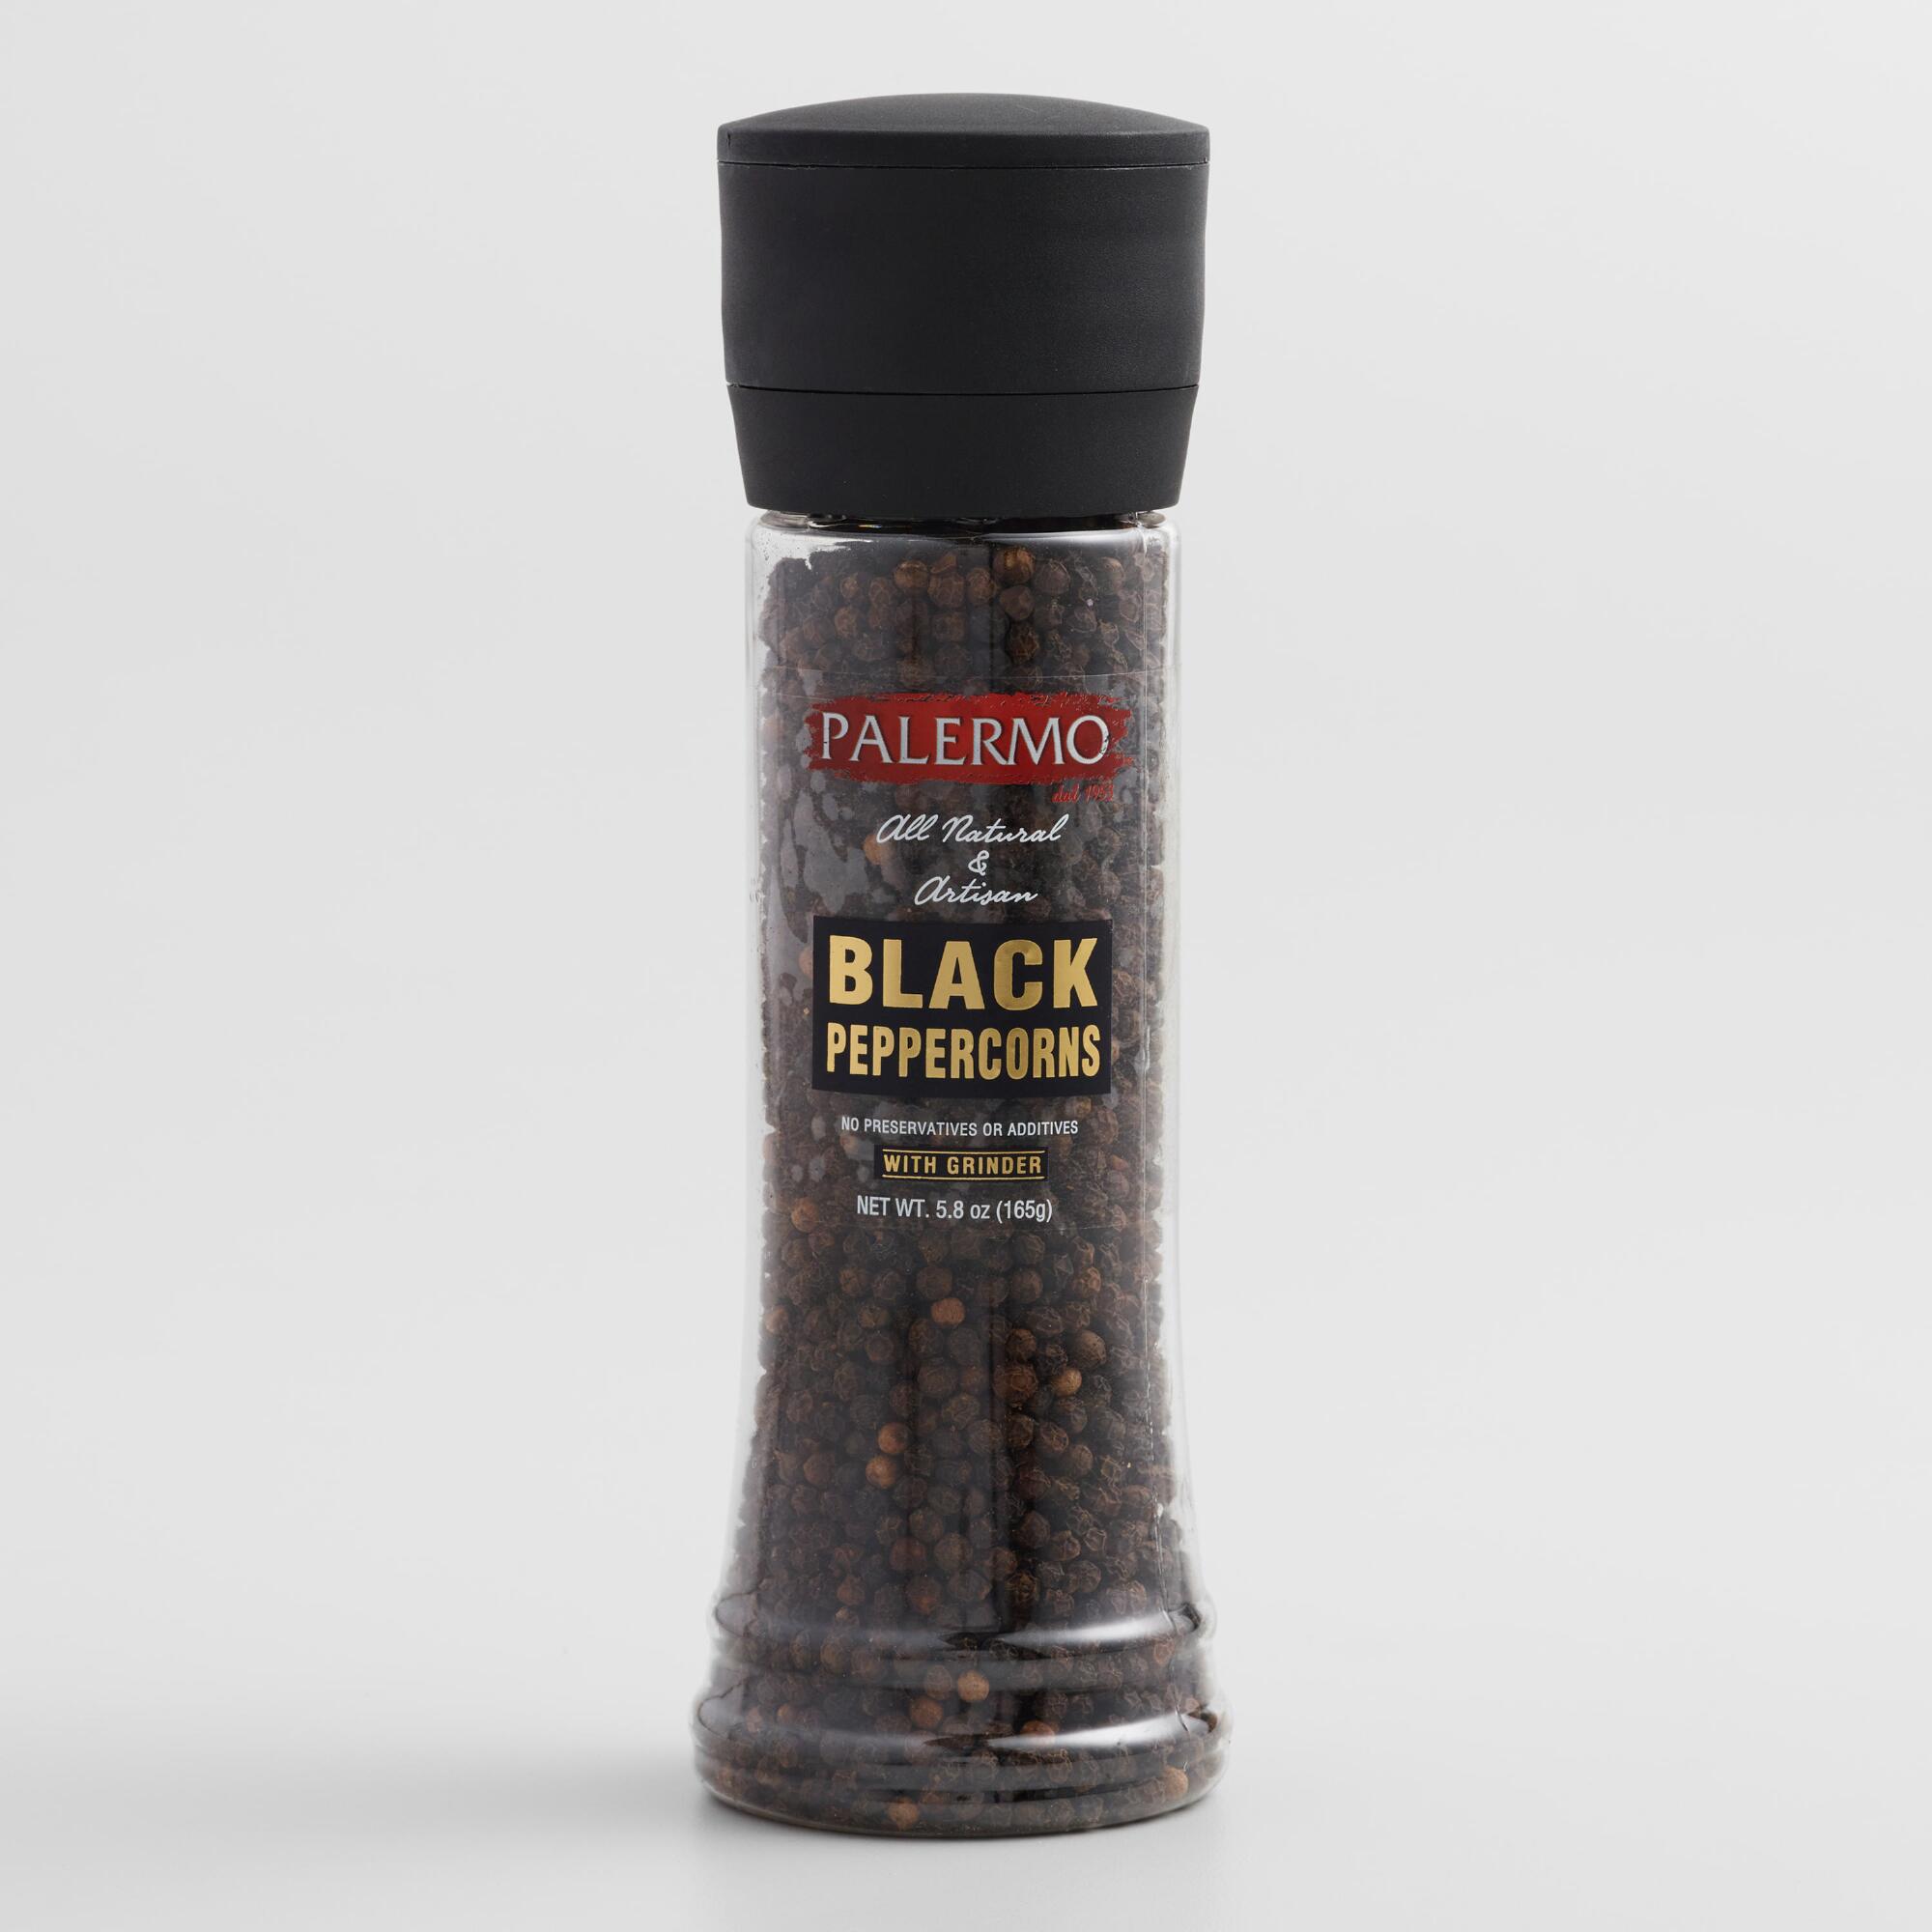 Palermo Black Peppercorn Grinder by World Market